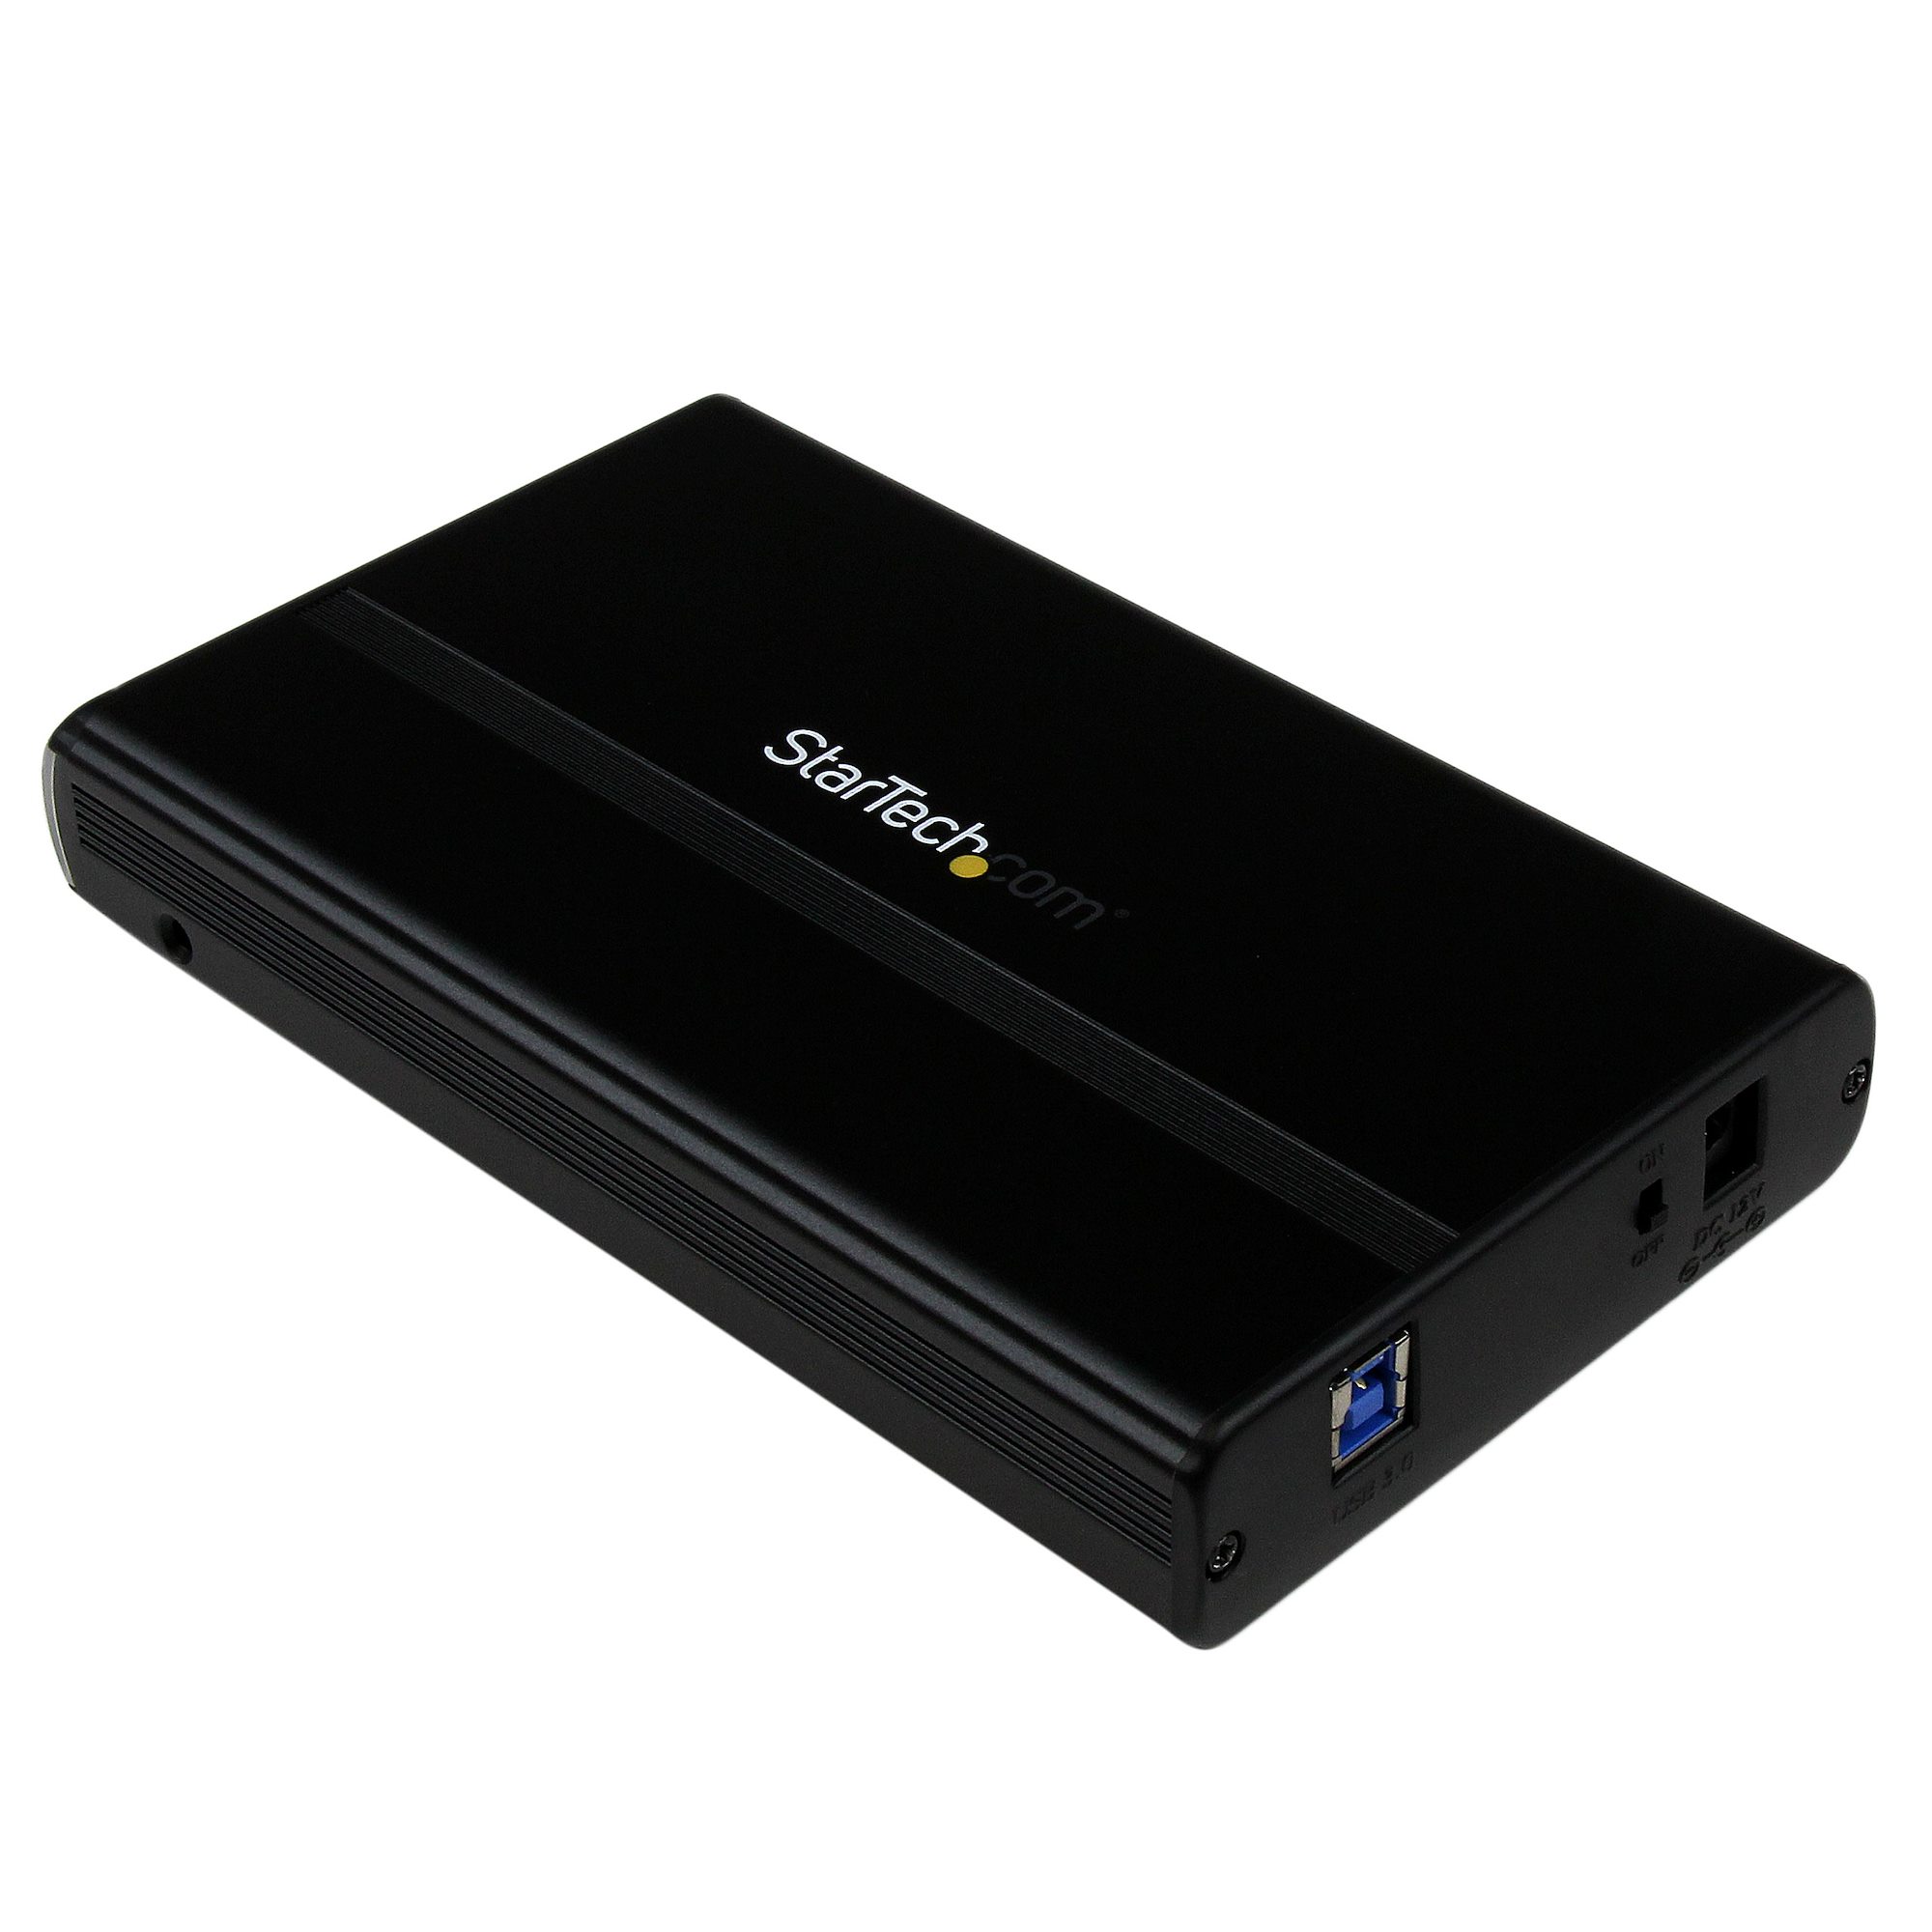 3.5 USB IDE SATA External HDD Enclosure - External Drive 